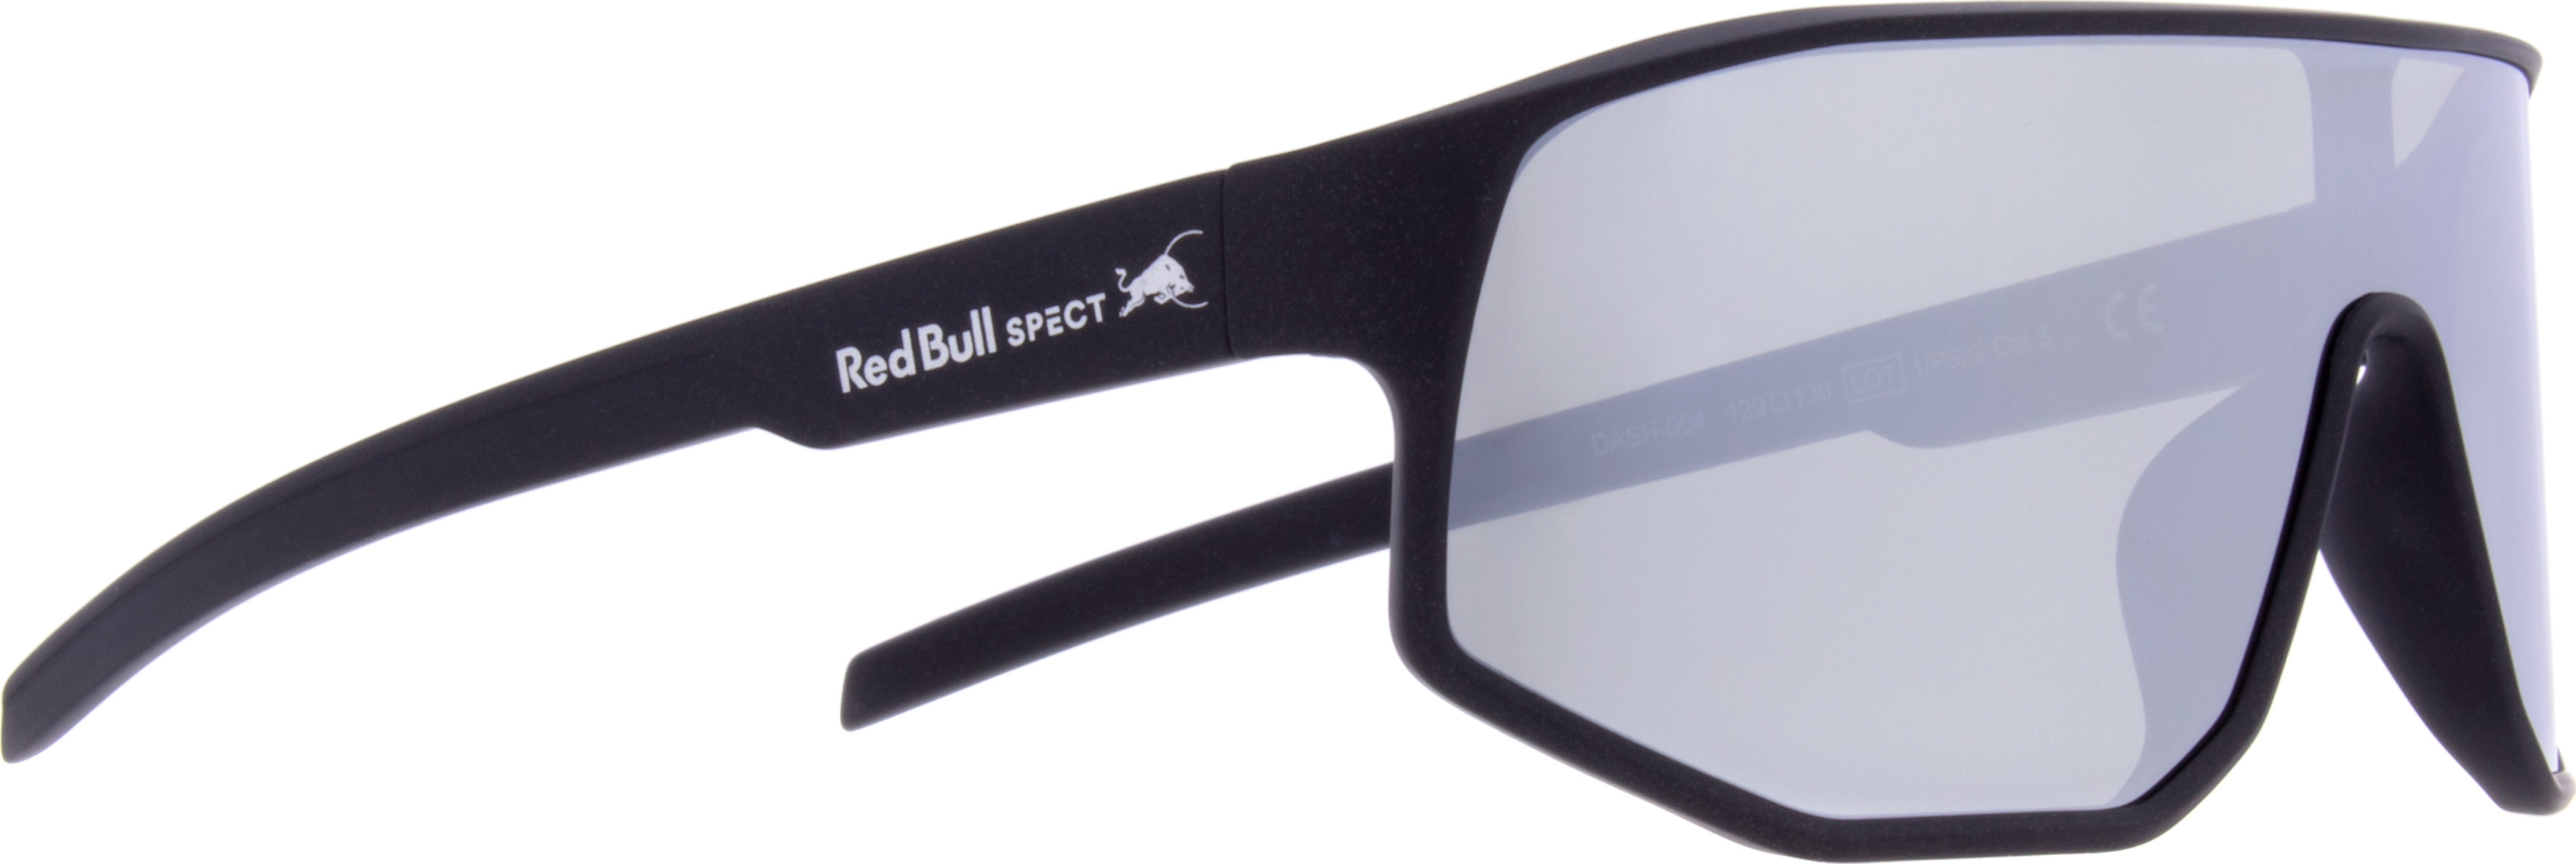 Red Bull SPECT Red Bull SPECT Dash Black OneSize, Black/Smoke/Silver Mirror